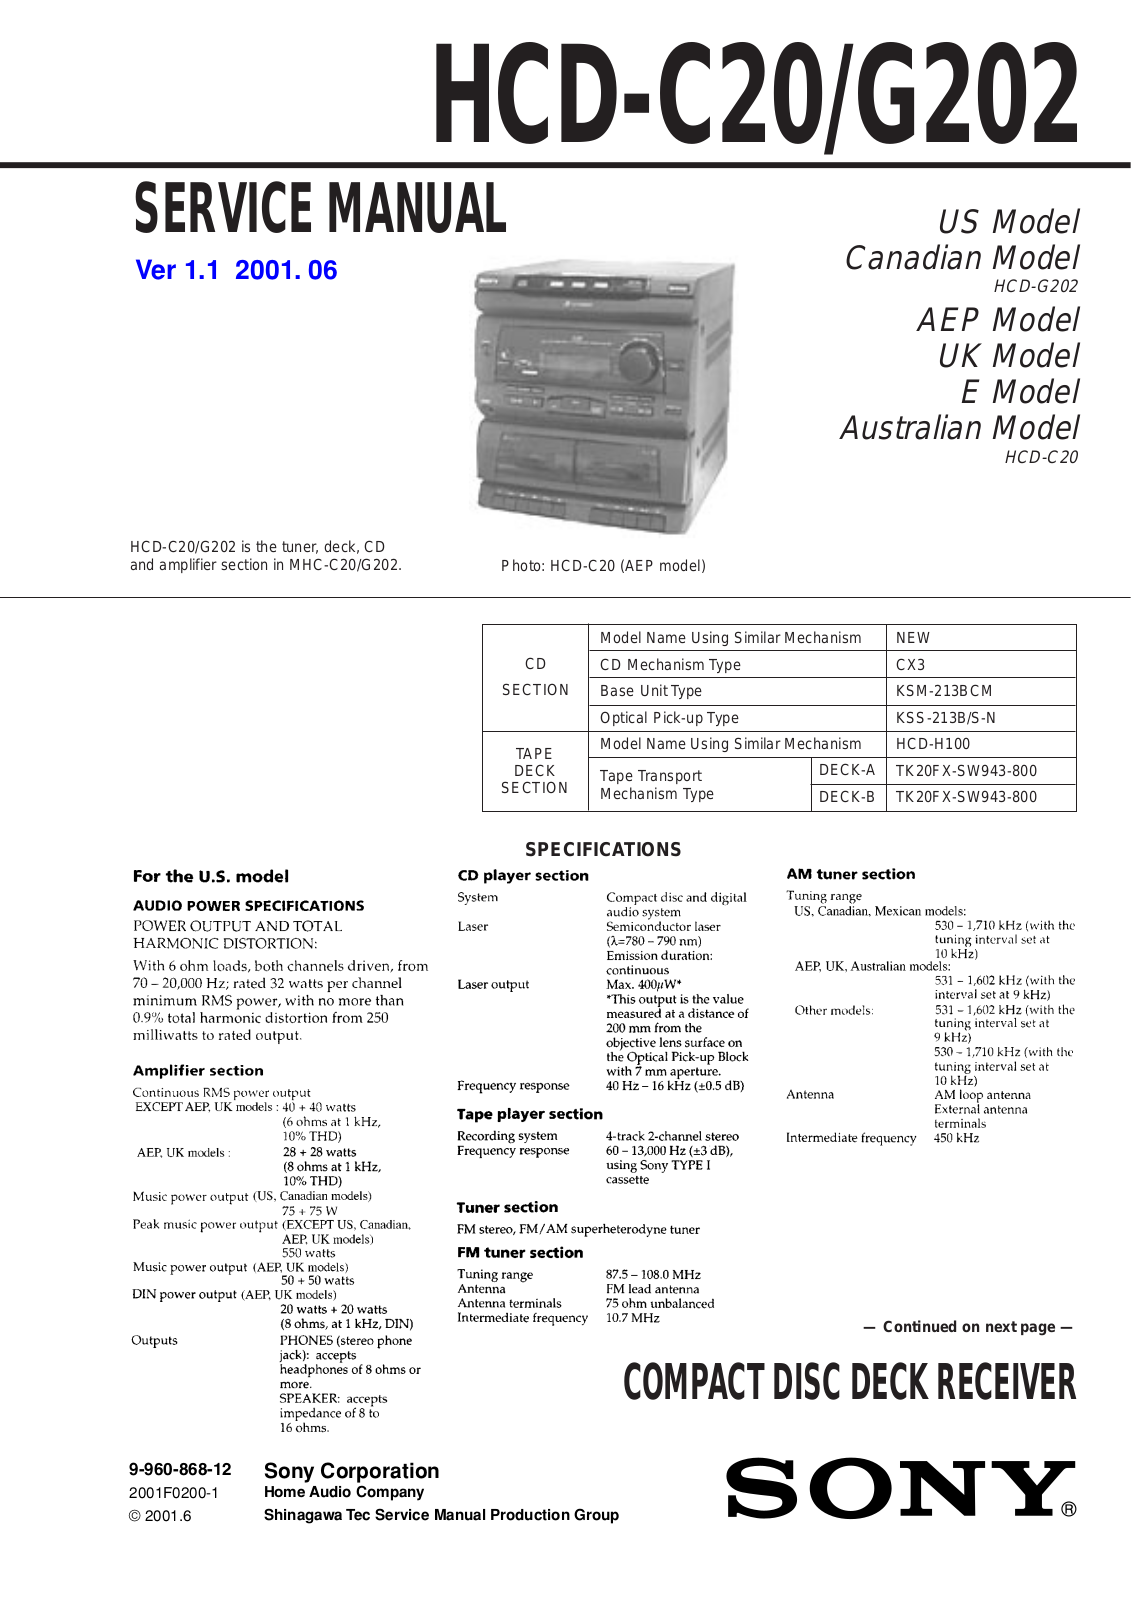 Sony HCD-C20, HCD-G202 Service manual